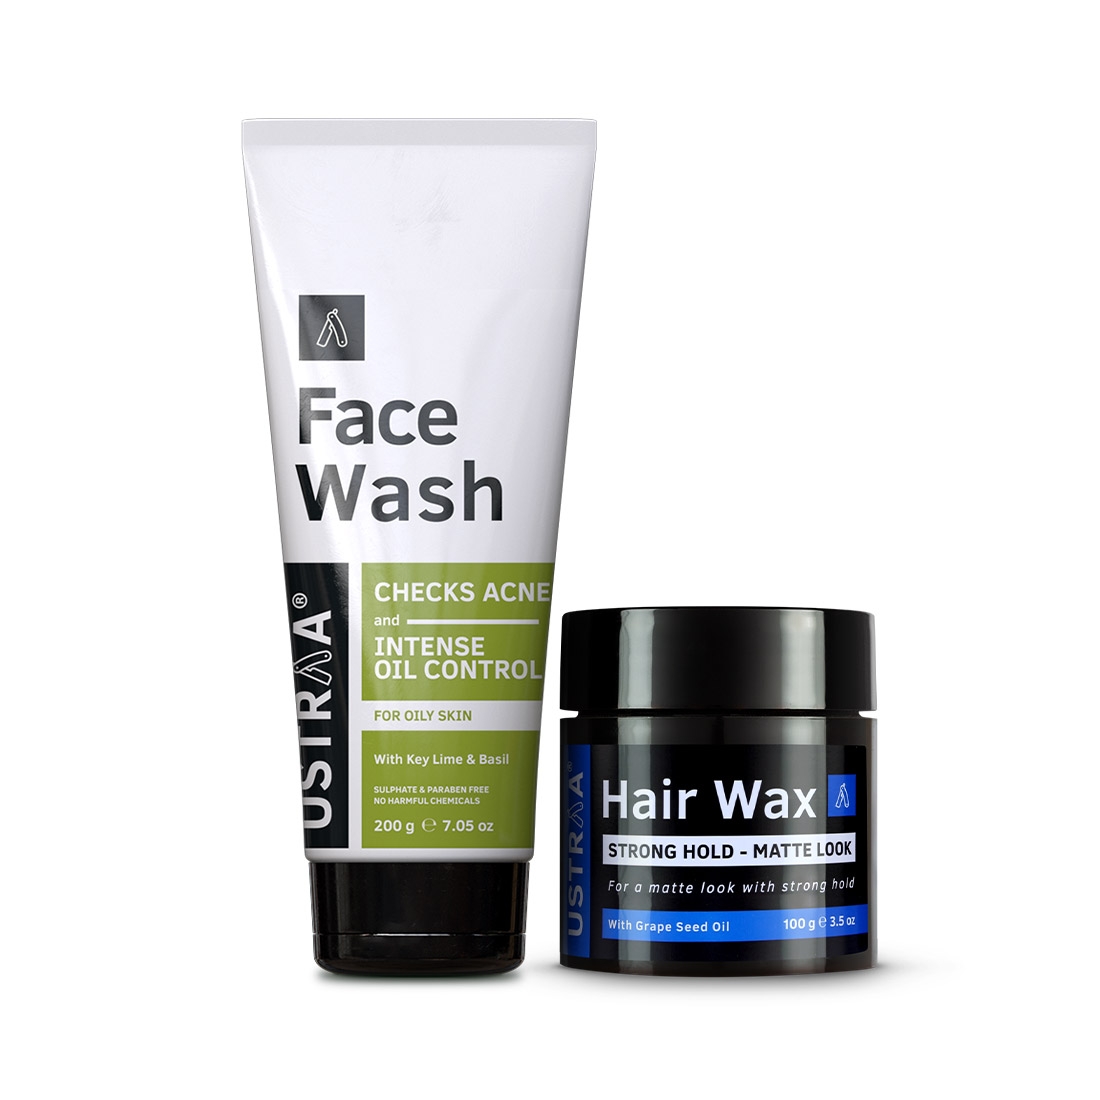 Ustraa Hair Wax Matte Look 100 g & Face Wash - Oily Skin 200 g